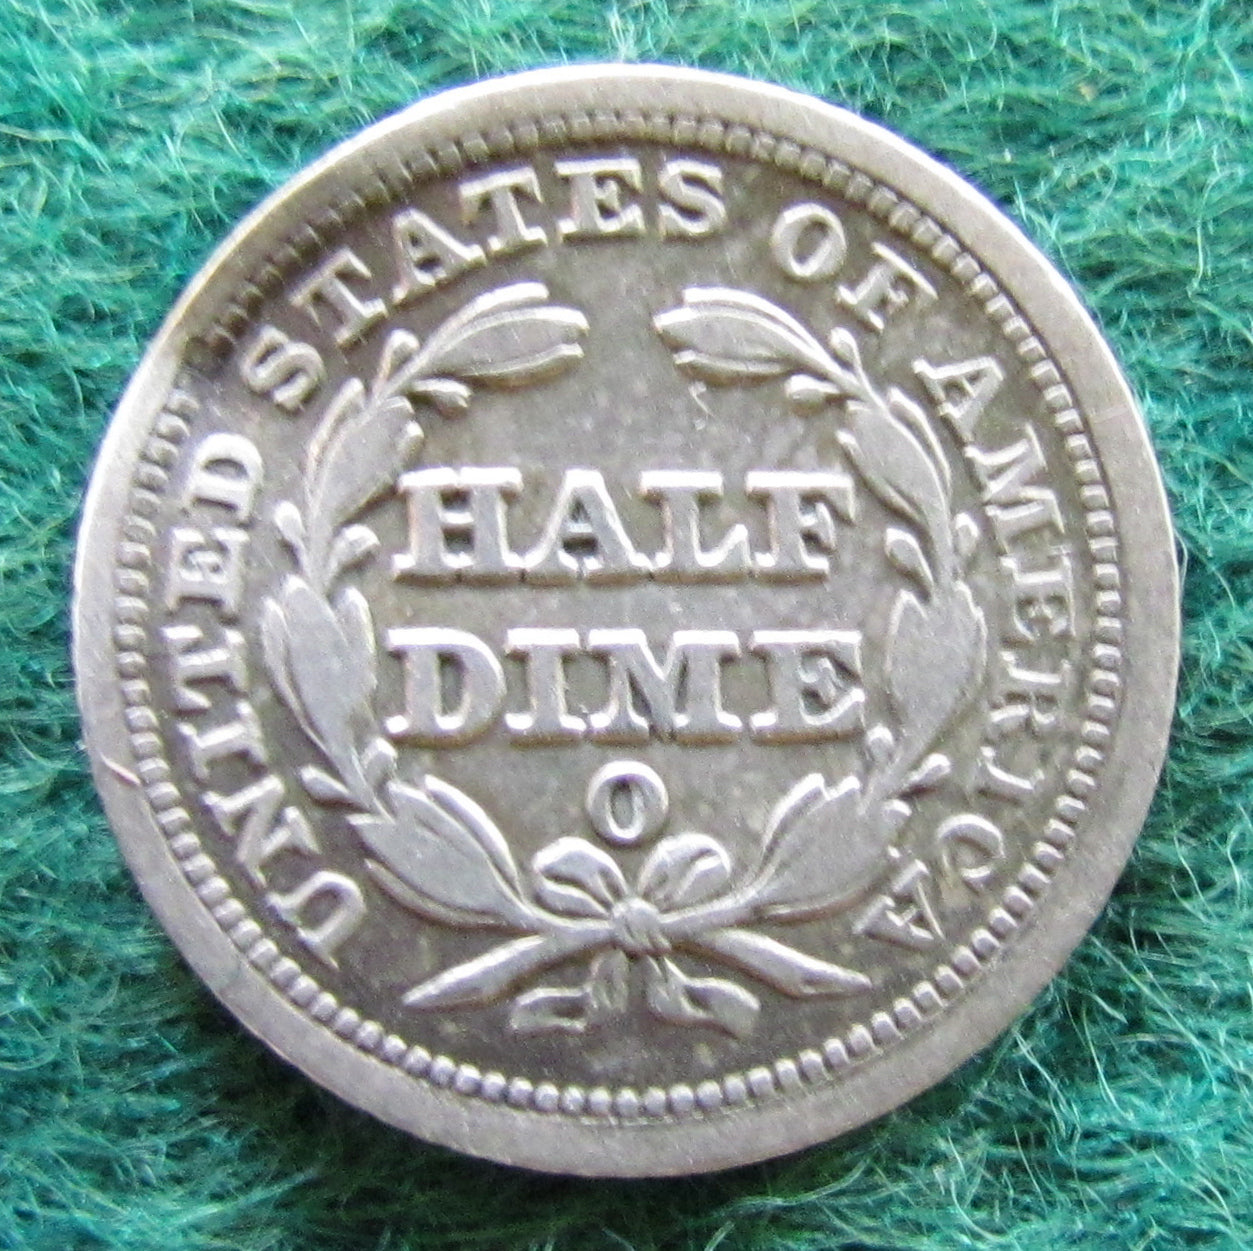 USA American 1854 O Silver Seated Liberty Half Dime Coin - Circulated